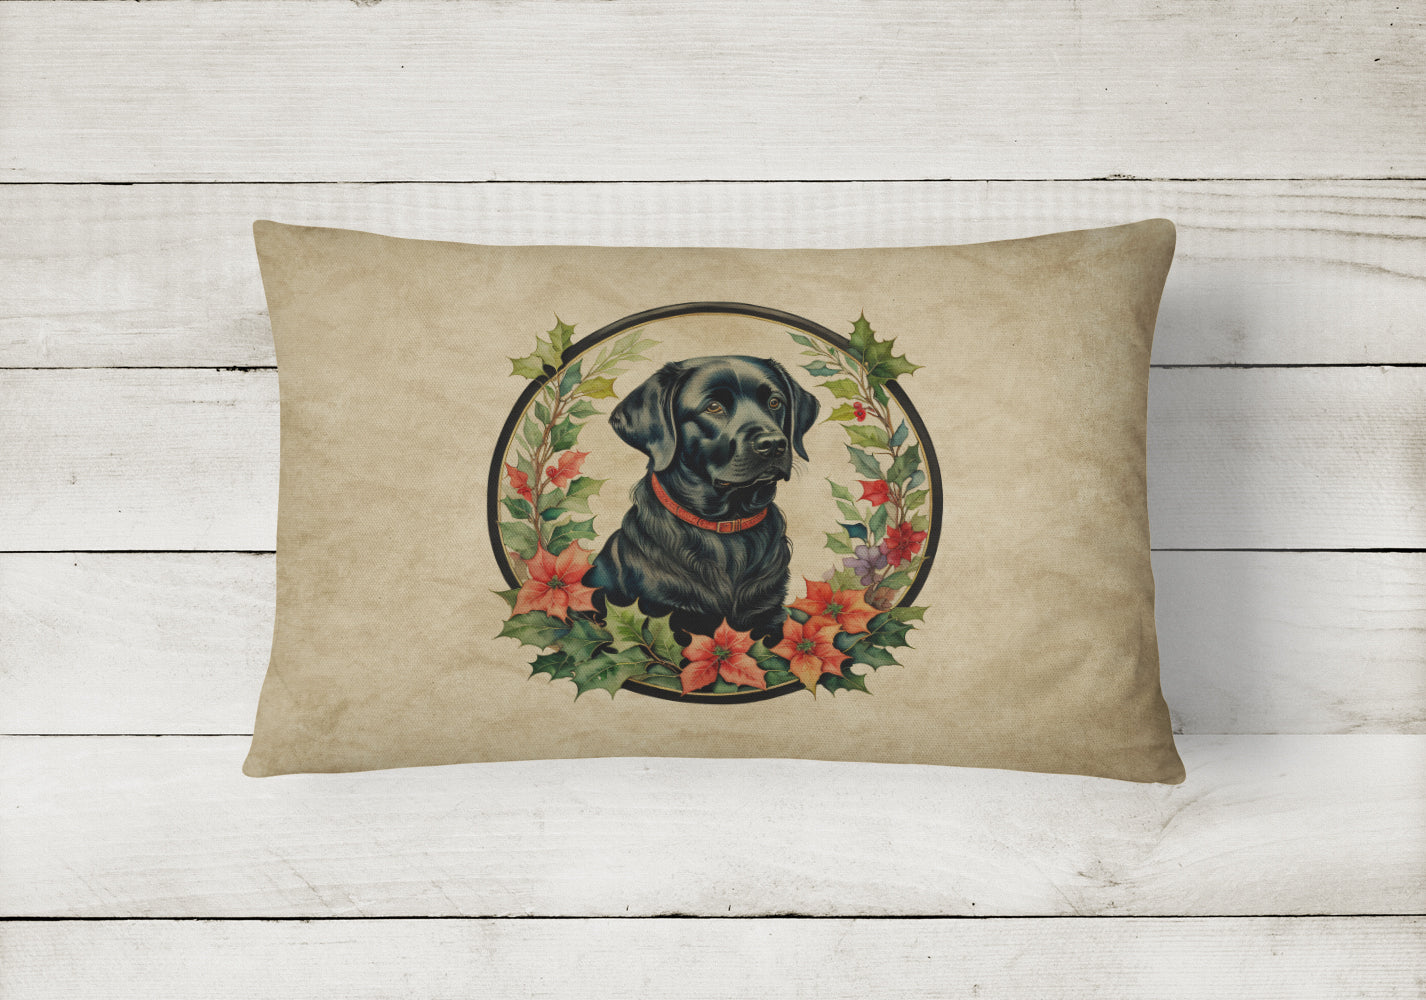 Buy this Labrador Retriever Christmas Flowers Throw Pillow